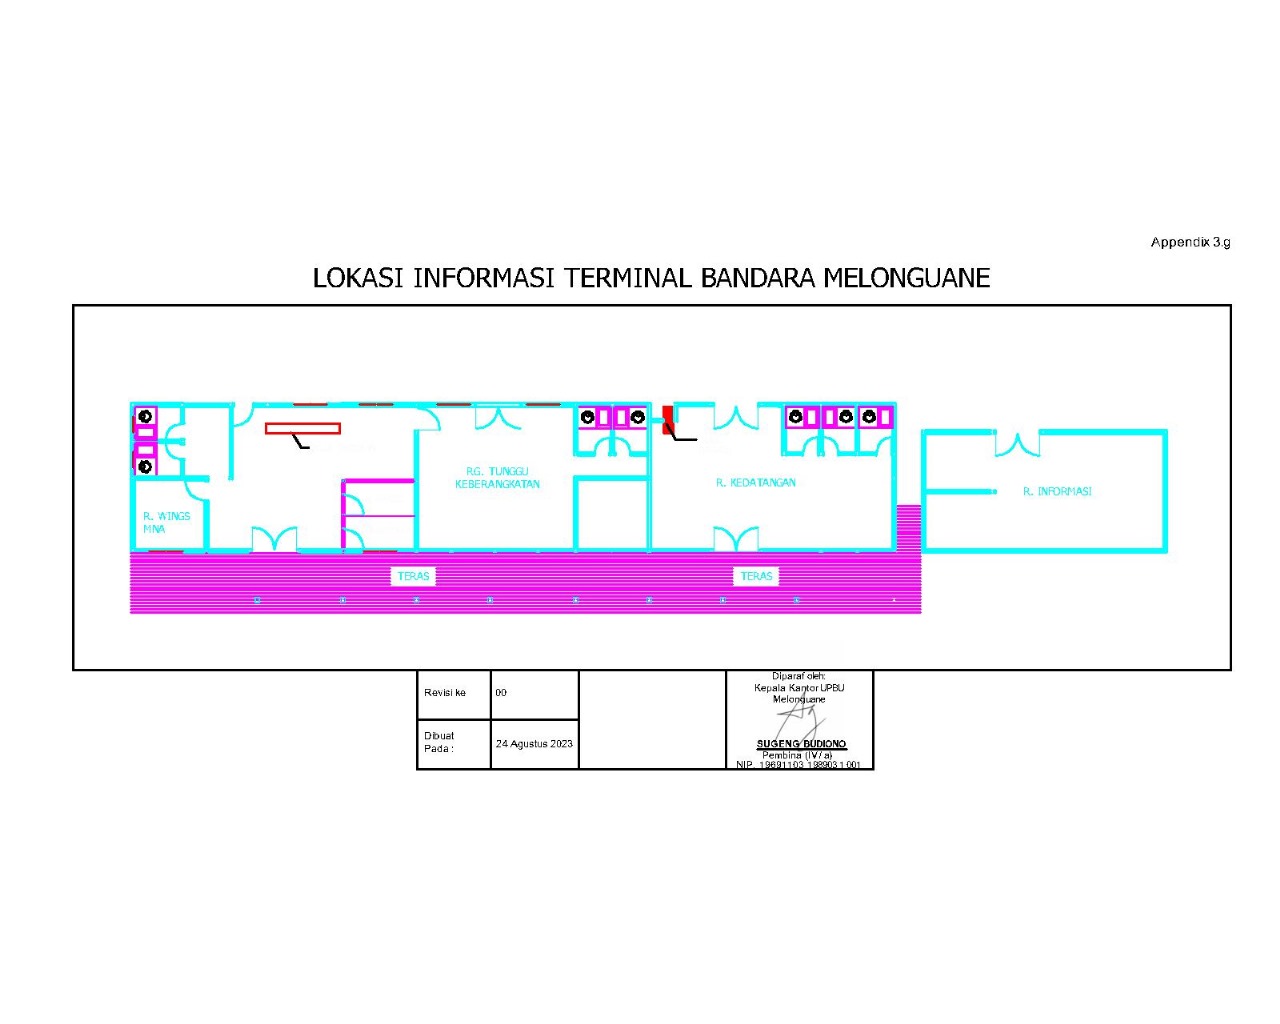 Gambar Peta Bandara Denah Terminal Bandara Melonguane